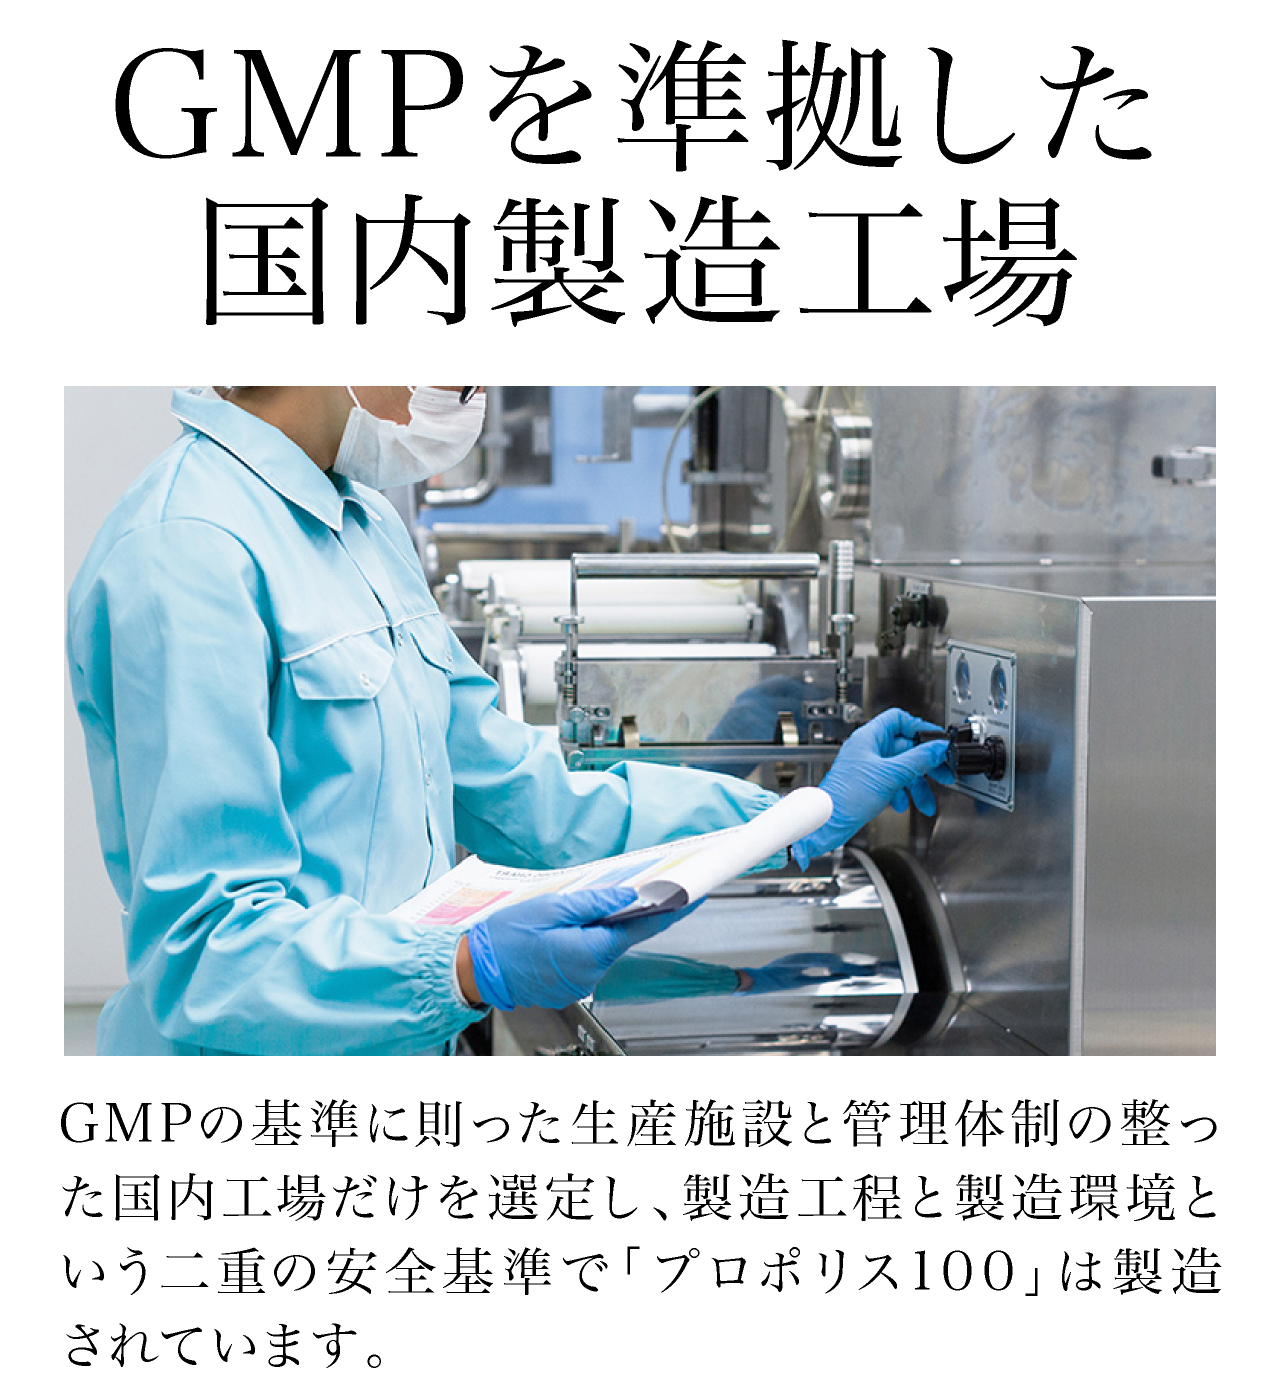 GMPを準拠した国内製造工場。GMPの基準に則った生産施設と管理体制の整った国内工場だけを選定し、製造工程と製造環境という二重の安全基準で「プロポリス100」は製造されています。